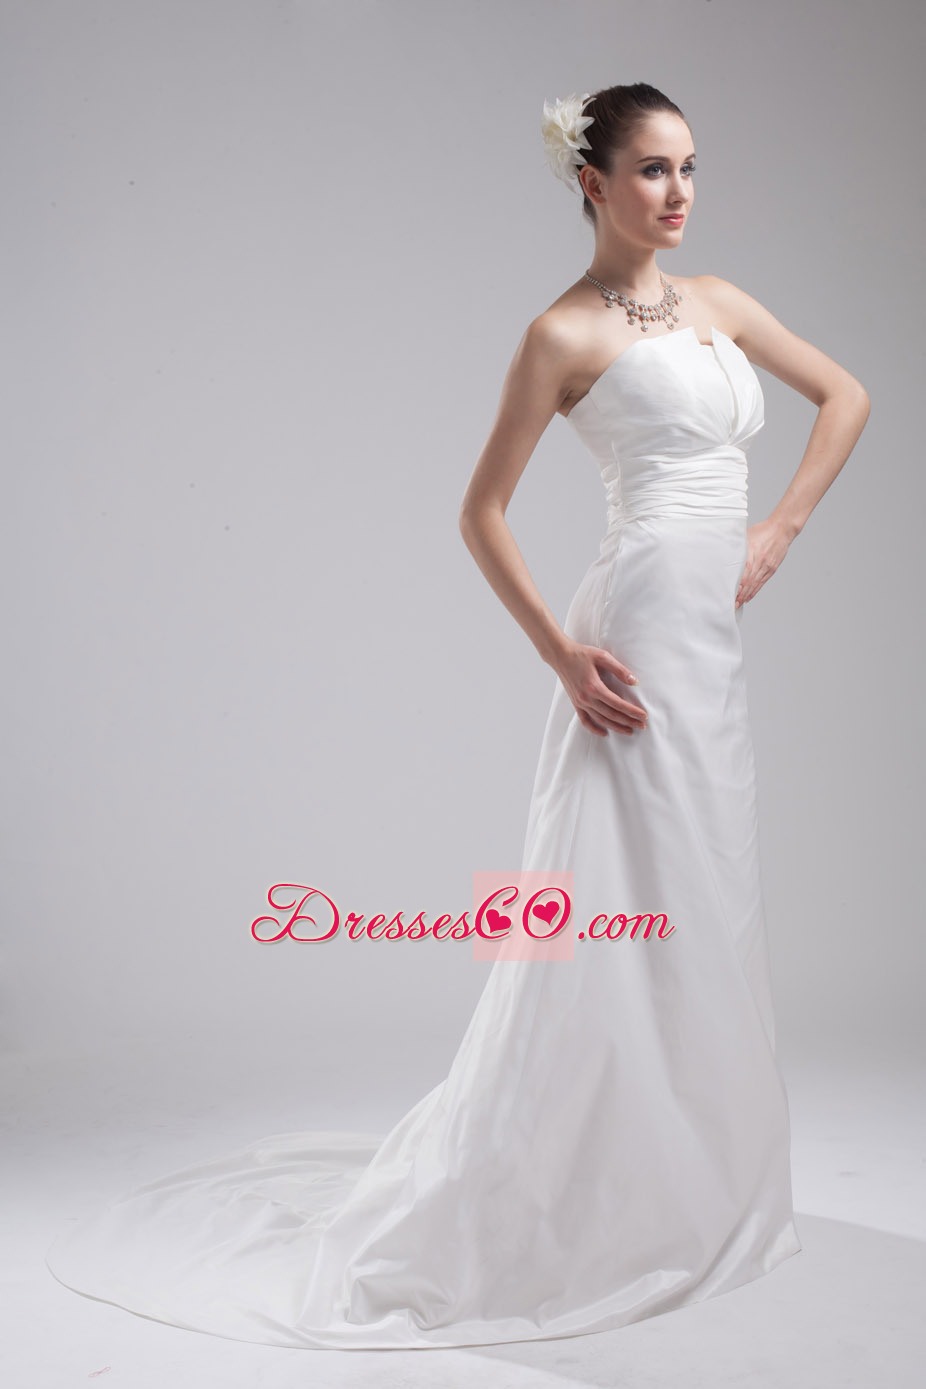 A-line Strapless Ruching Taffeta Wedding Dress